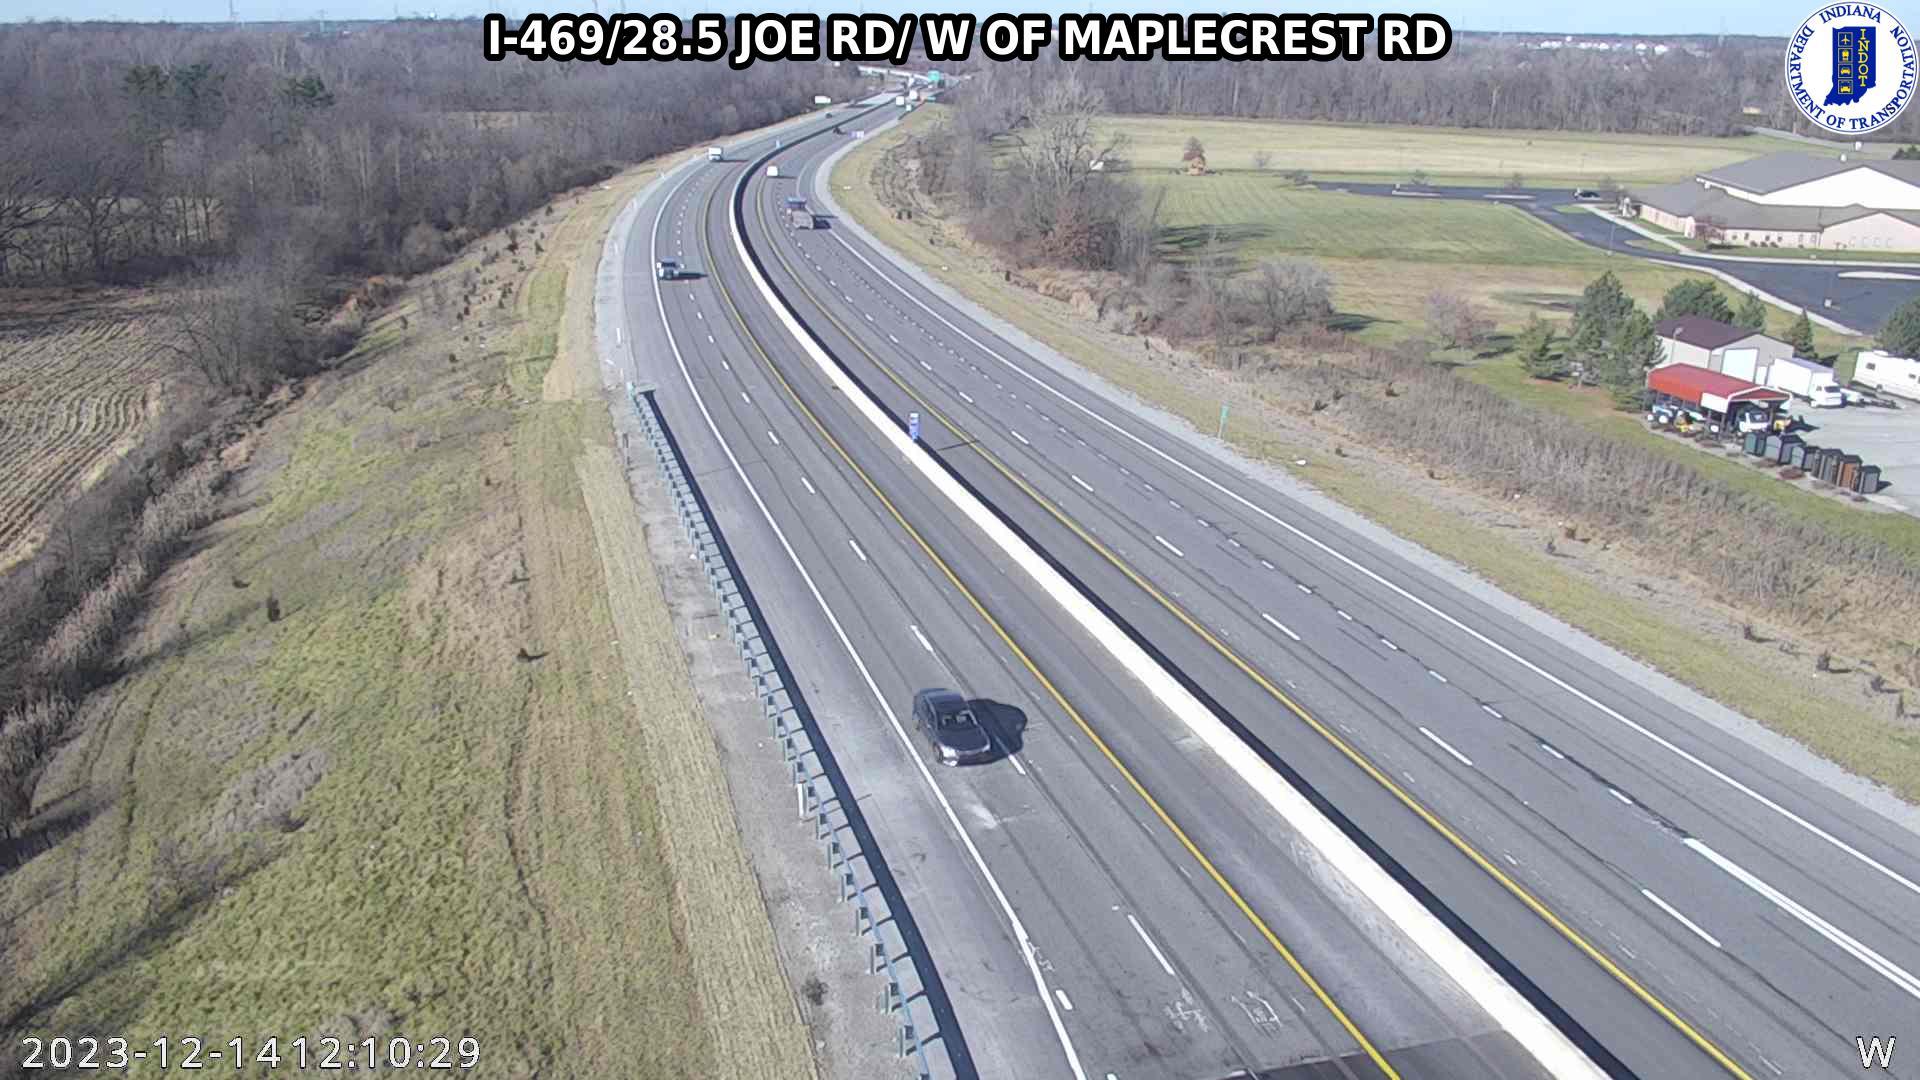 Leo-Cedarville: I-469: I-469/28.5 JOE RD/ W OF MAPLECREST RD Traffic Camera